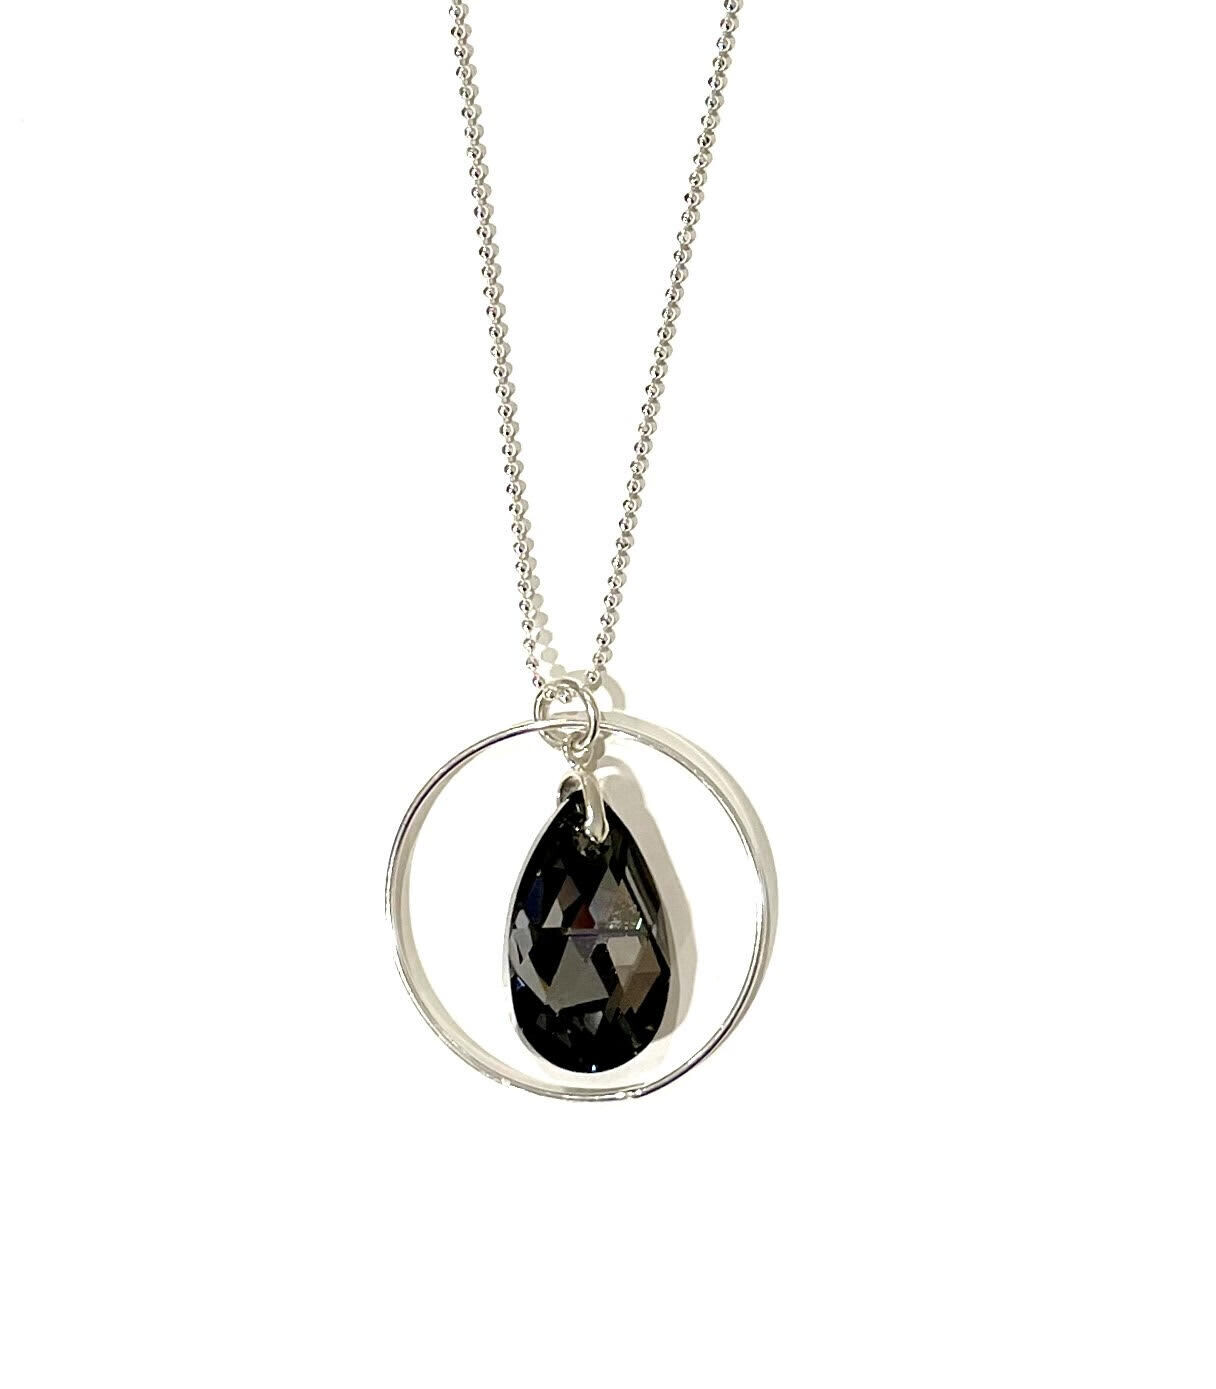 Black Pear Shaped Swarovski Crystal and Circle Necklace- Shy Giraffe 